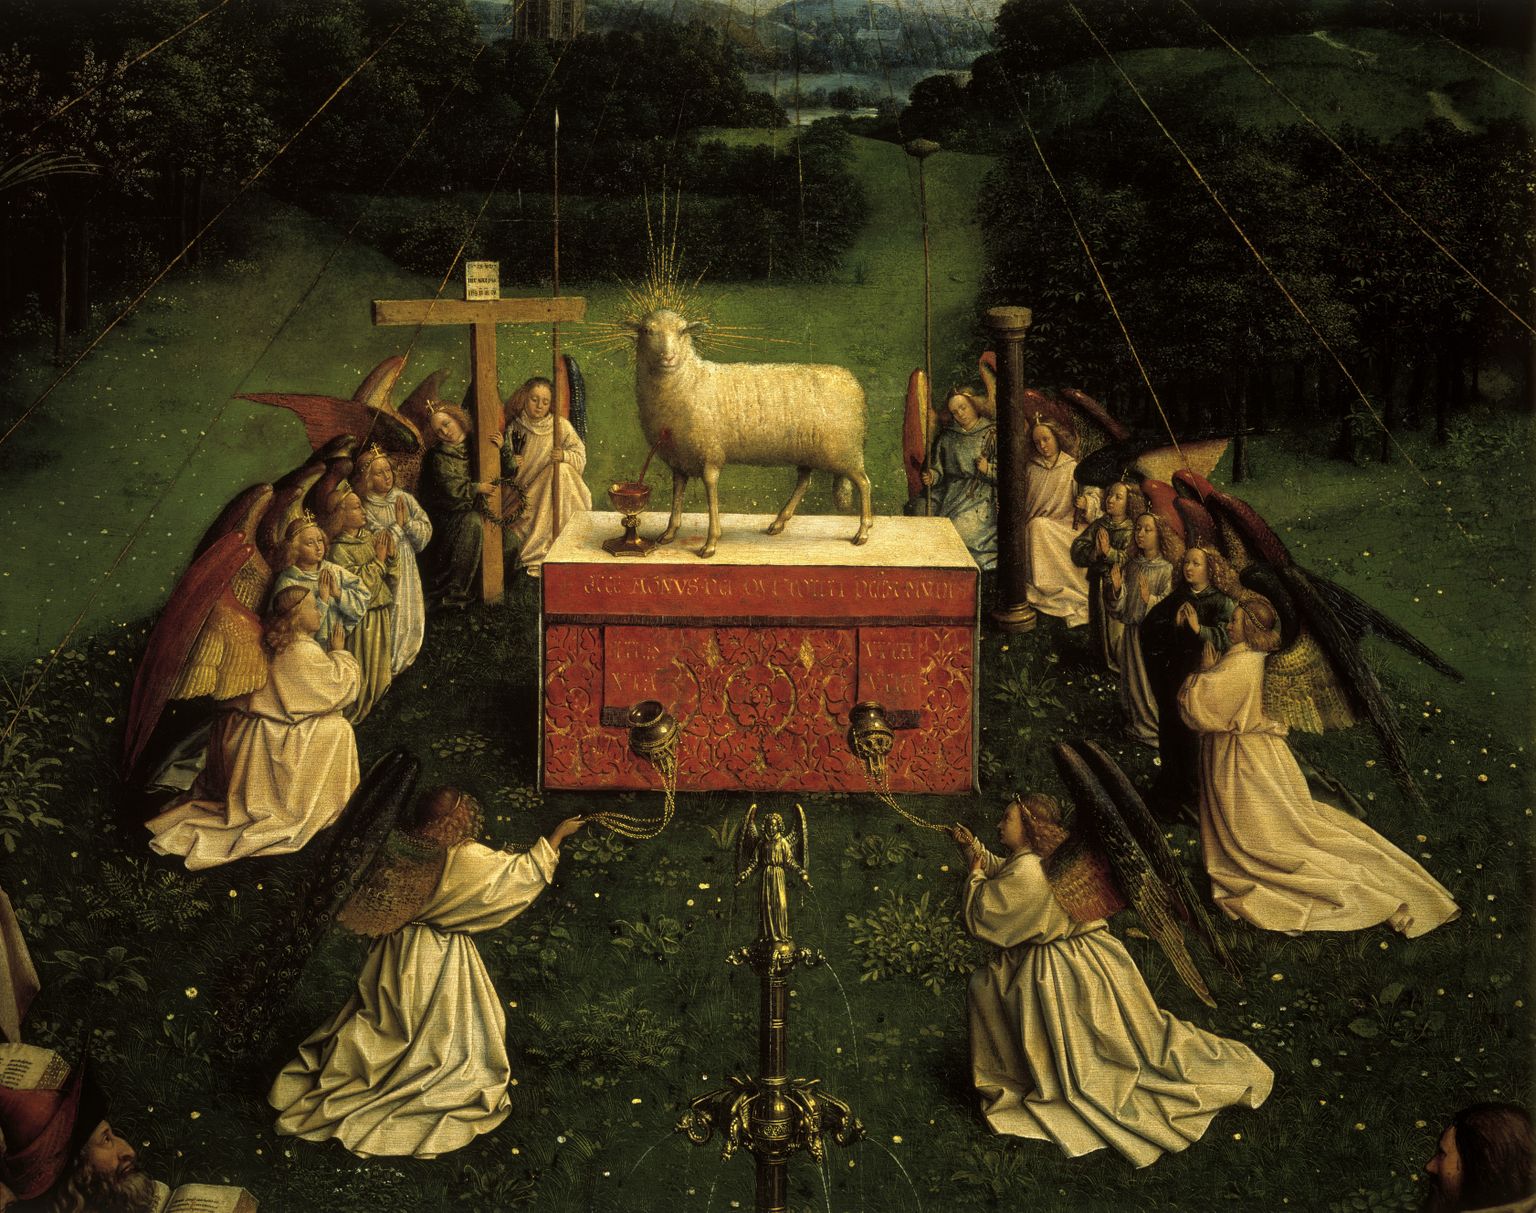 Belgia Genti Saint Bavo katedraali altarimaali keskne tegelane on lammas